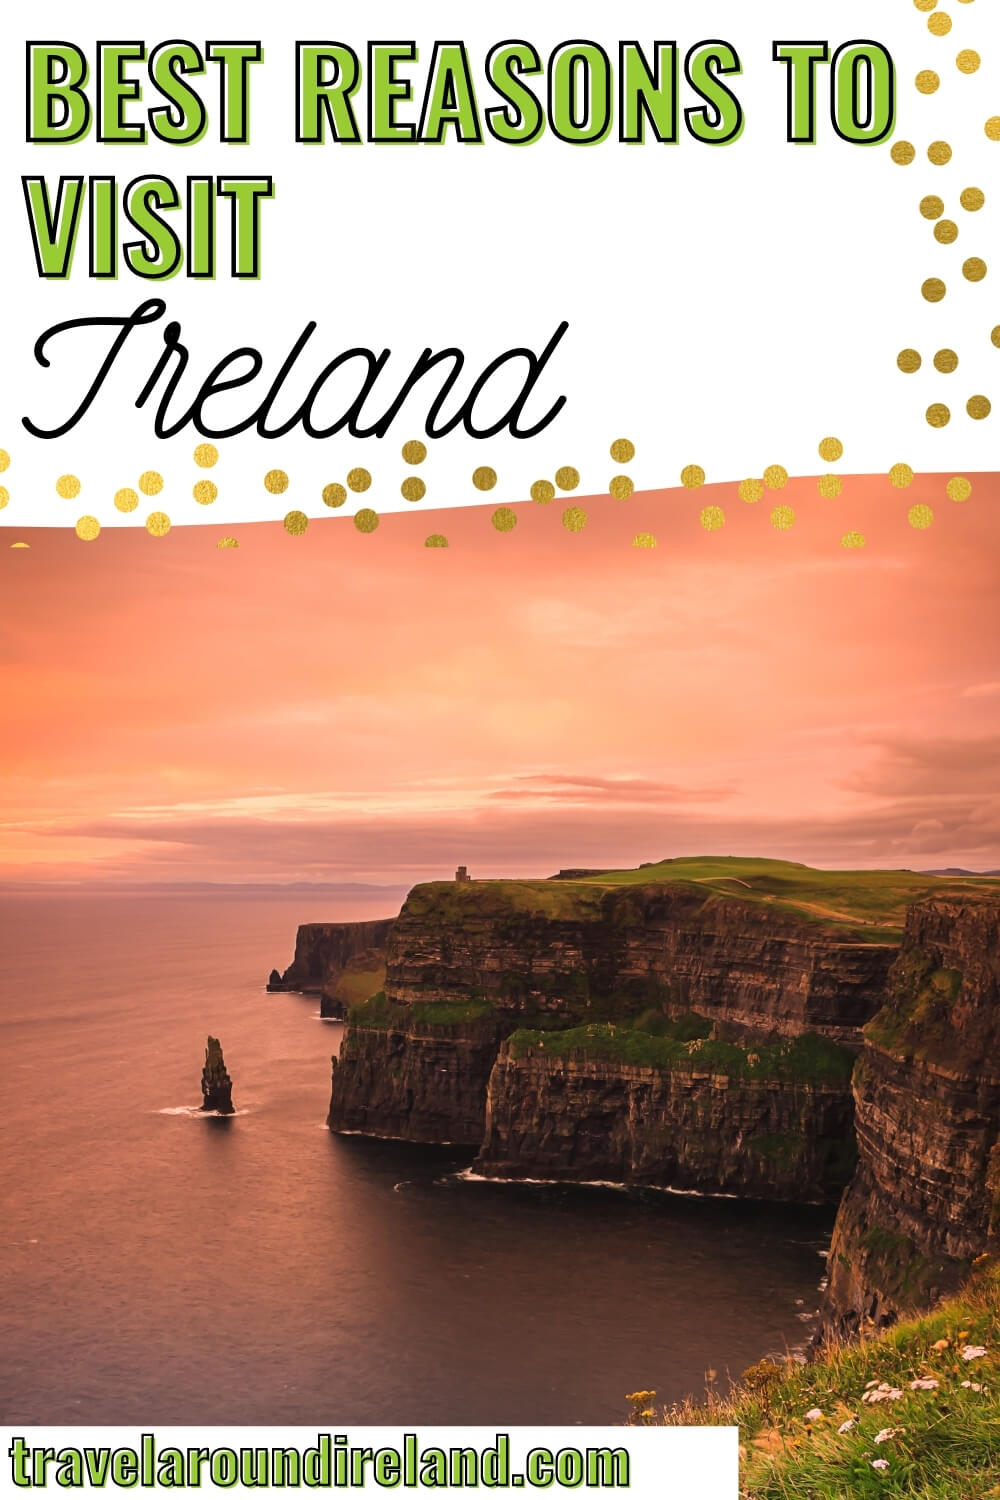 visit ireland official website